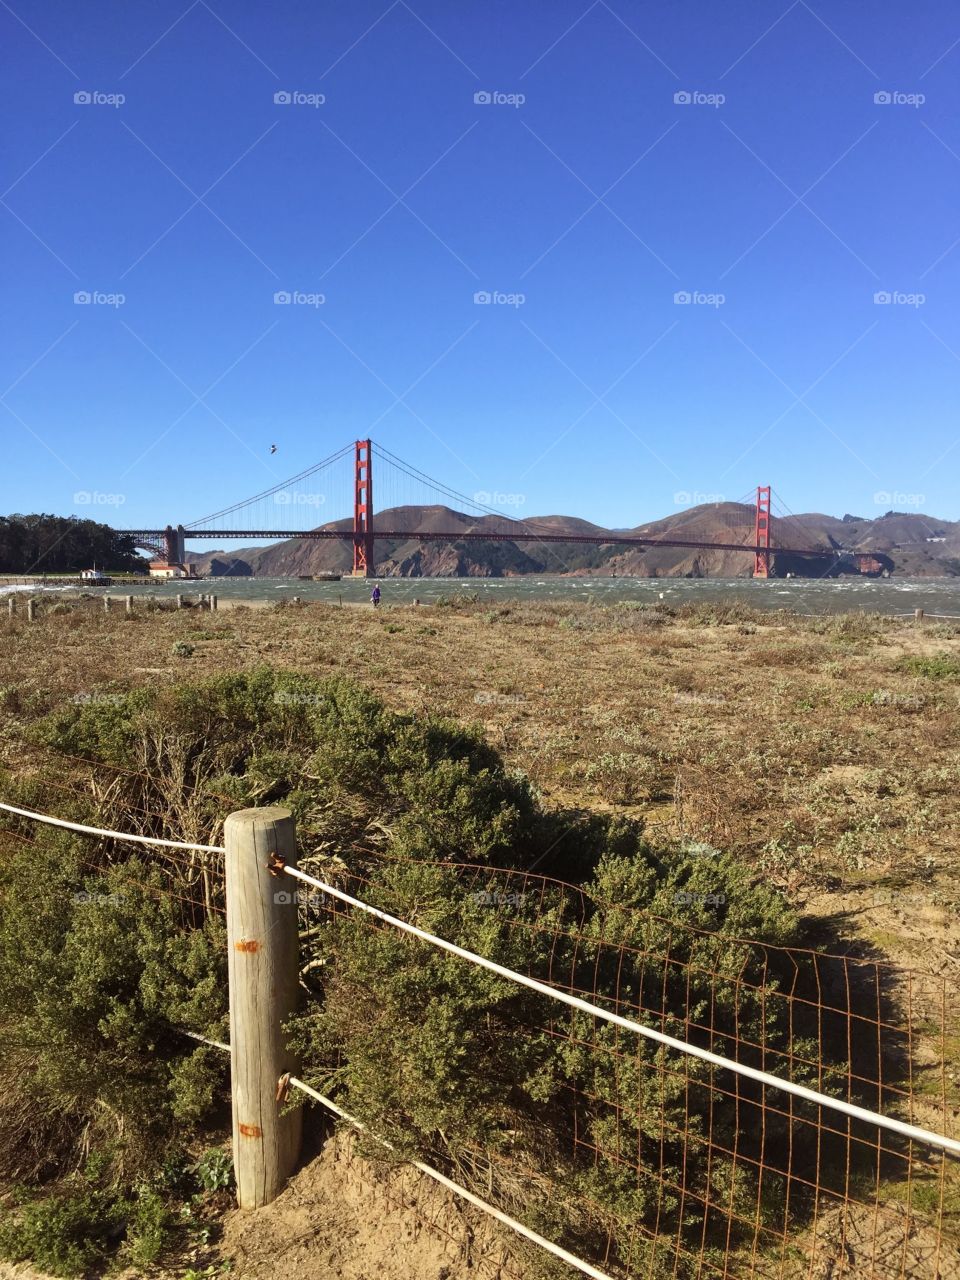 Distant GG Bridge. Golden Gate Bridge from a distance